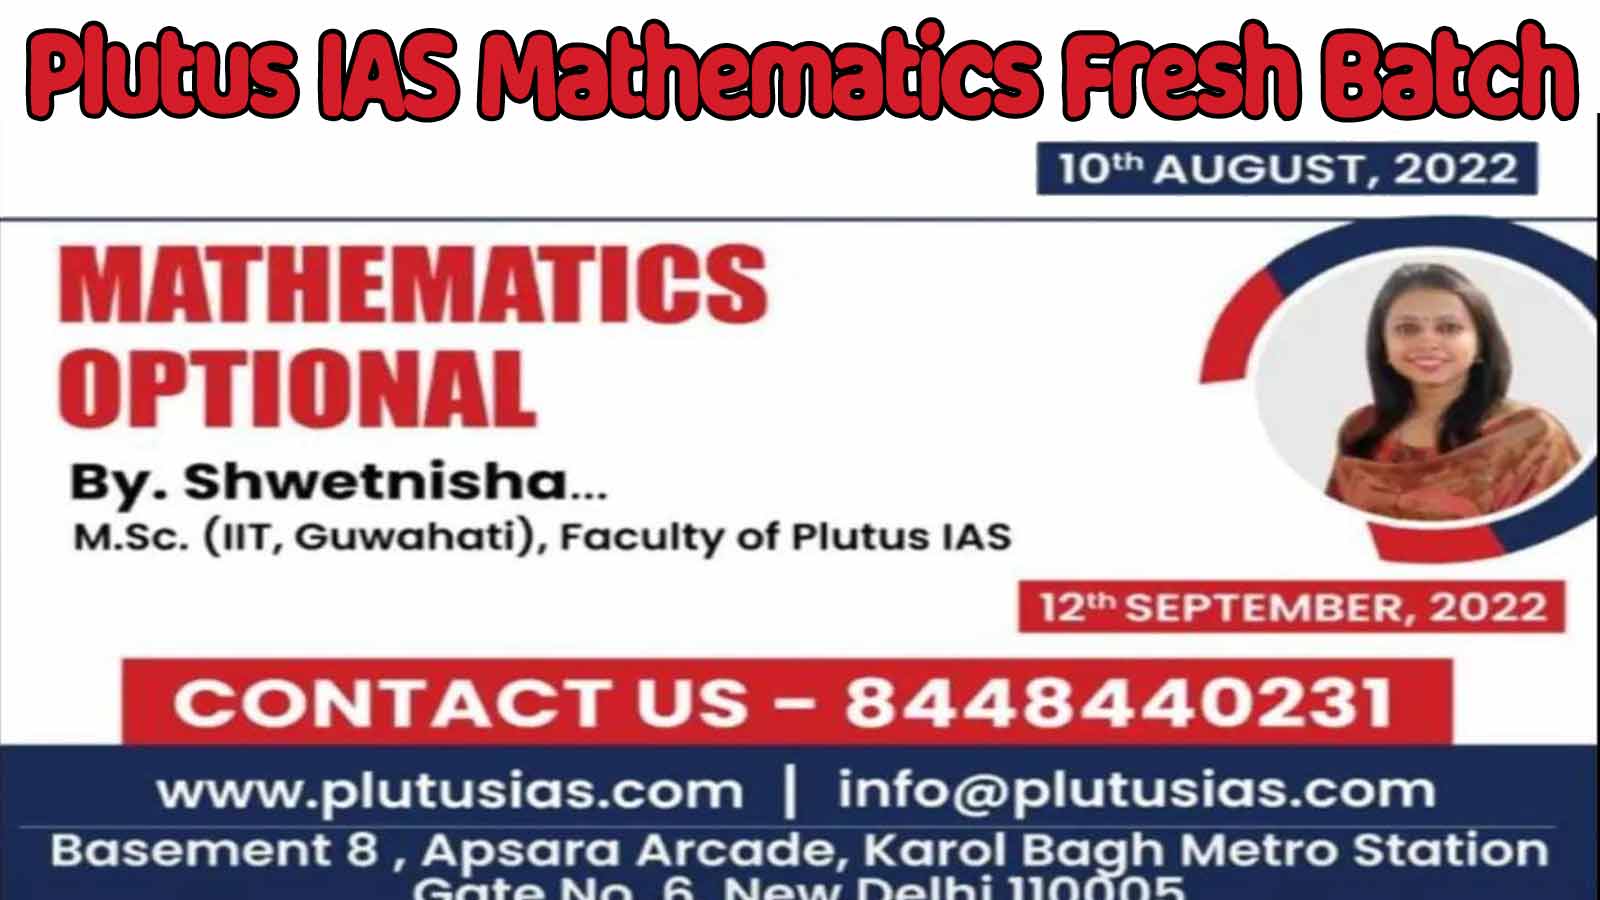 Plutus IAS Mathematics Fresh Batch